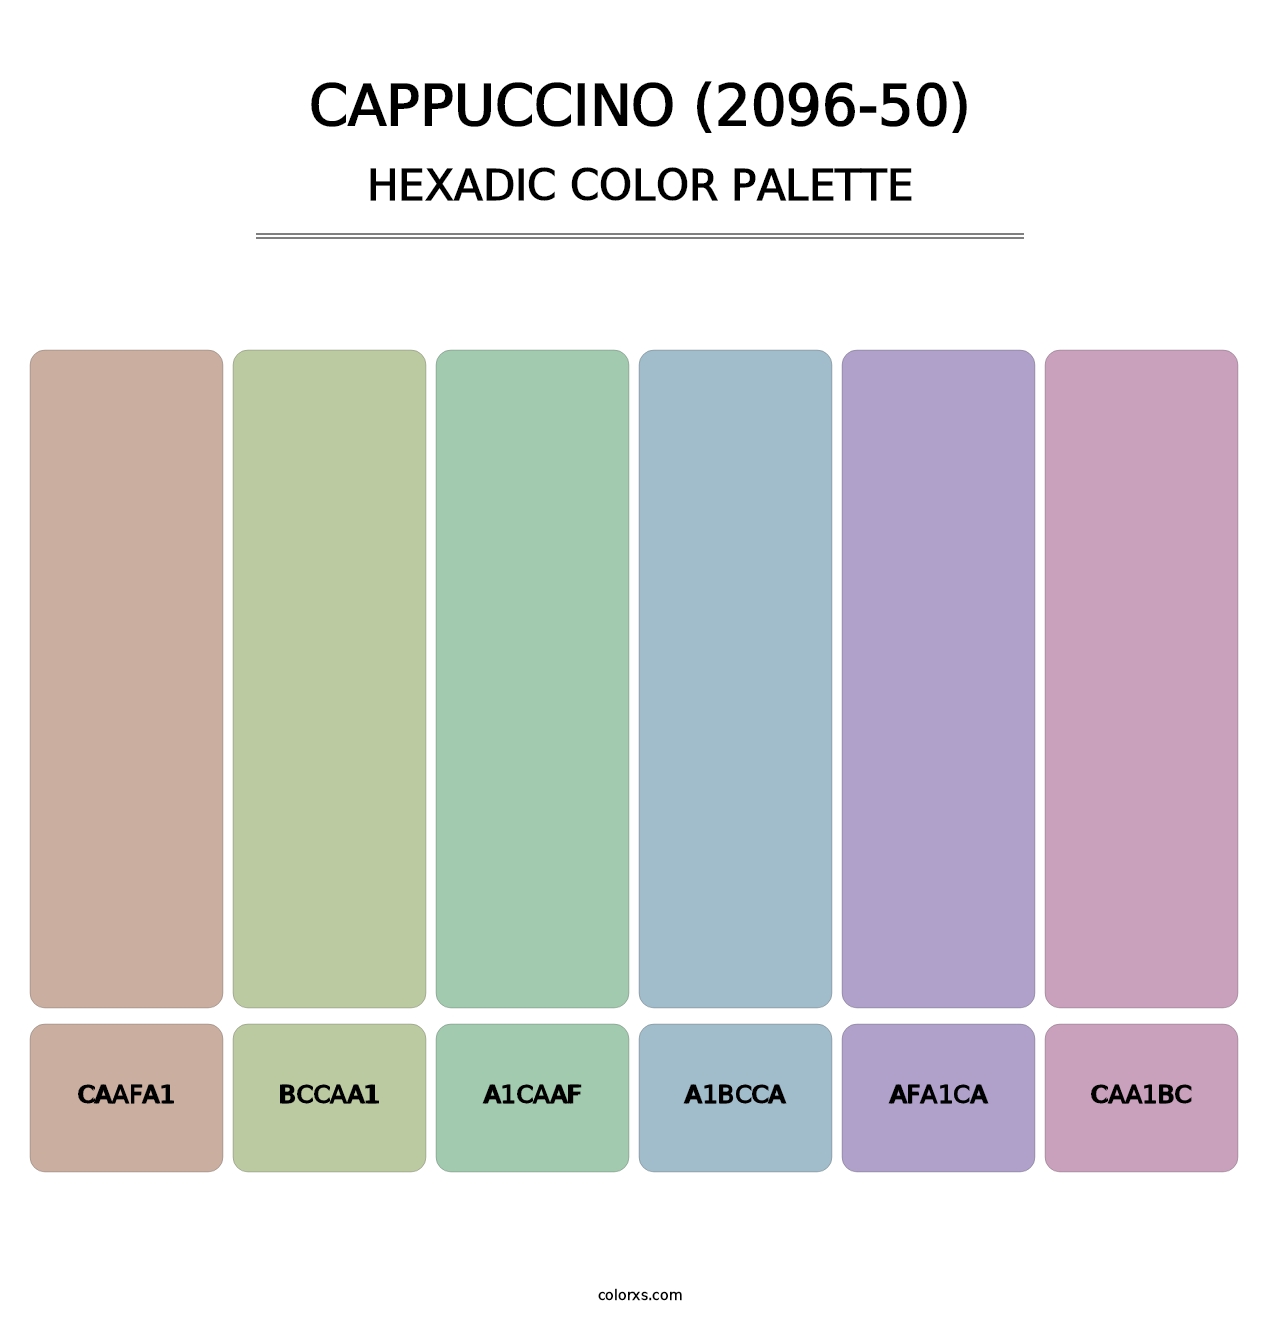 Cappuccino (2096-50) - Hexadic Color Palette